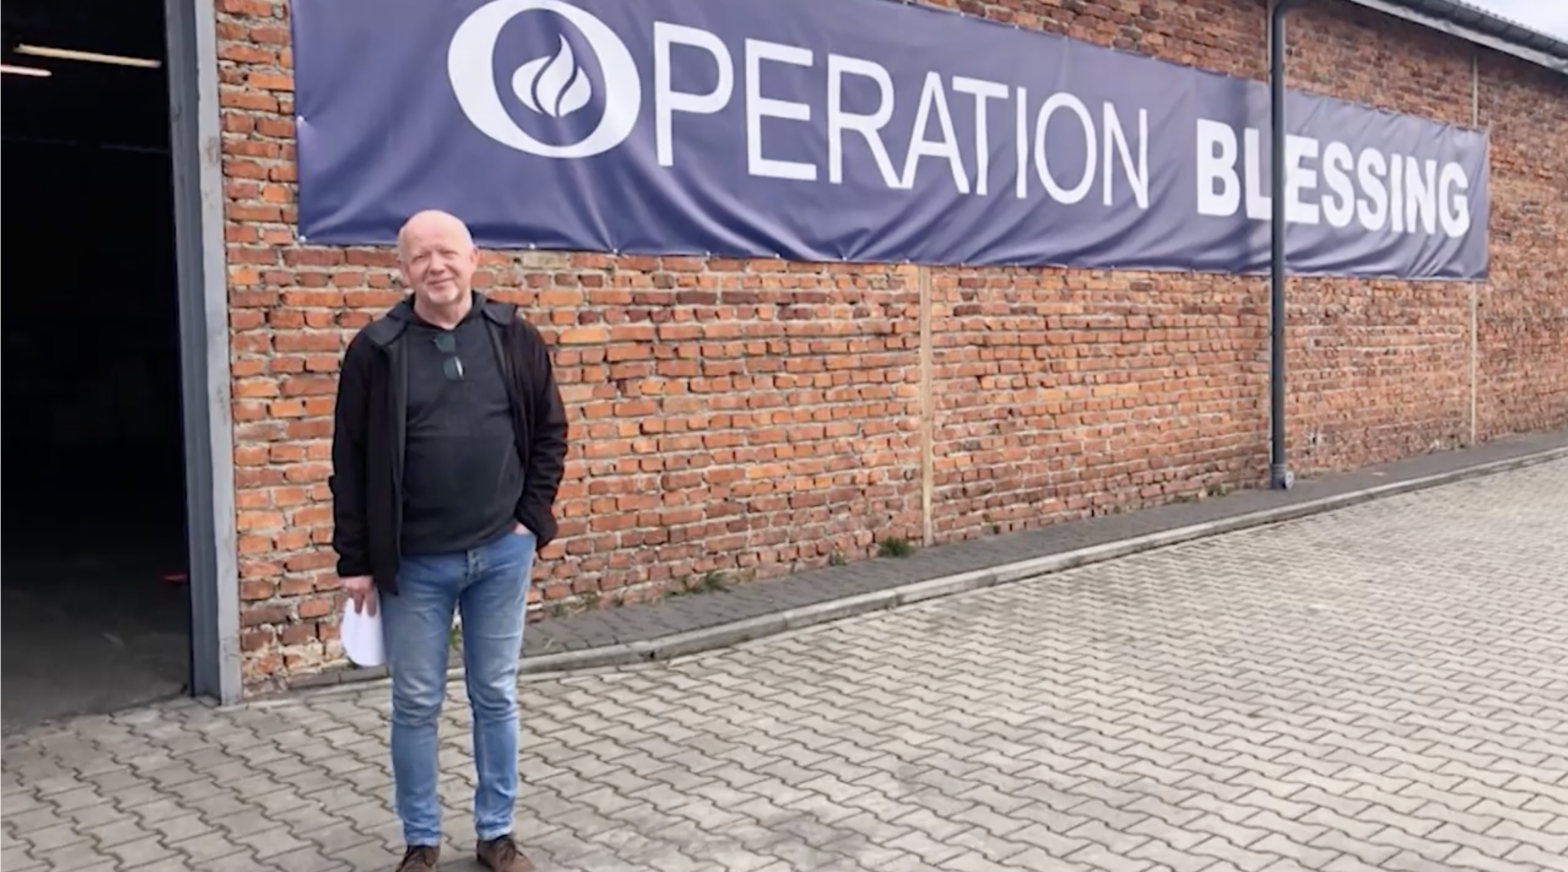 Polish churches helping Ukraine crisis victims